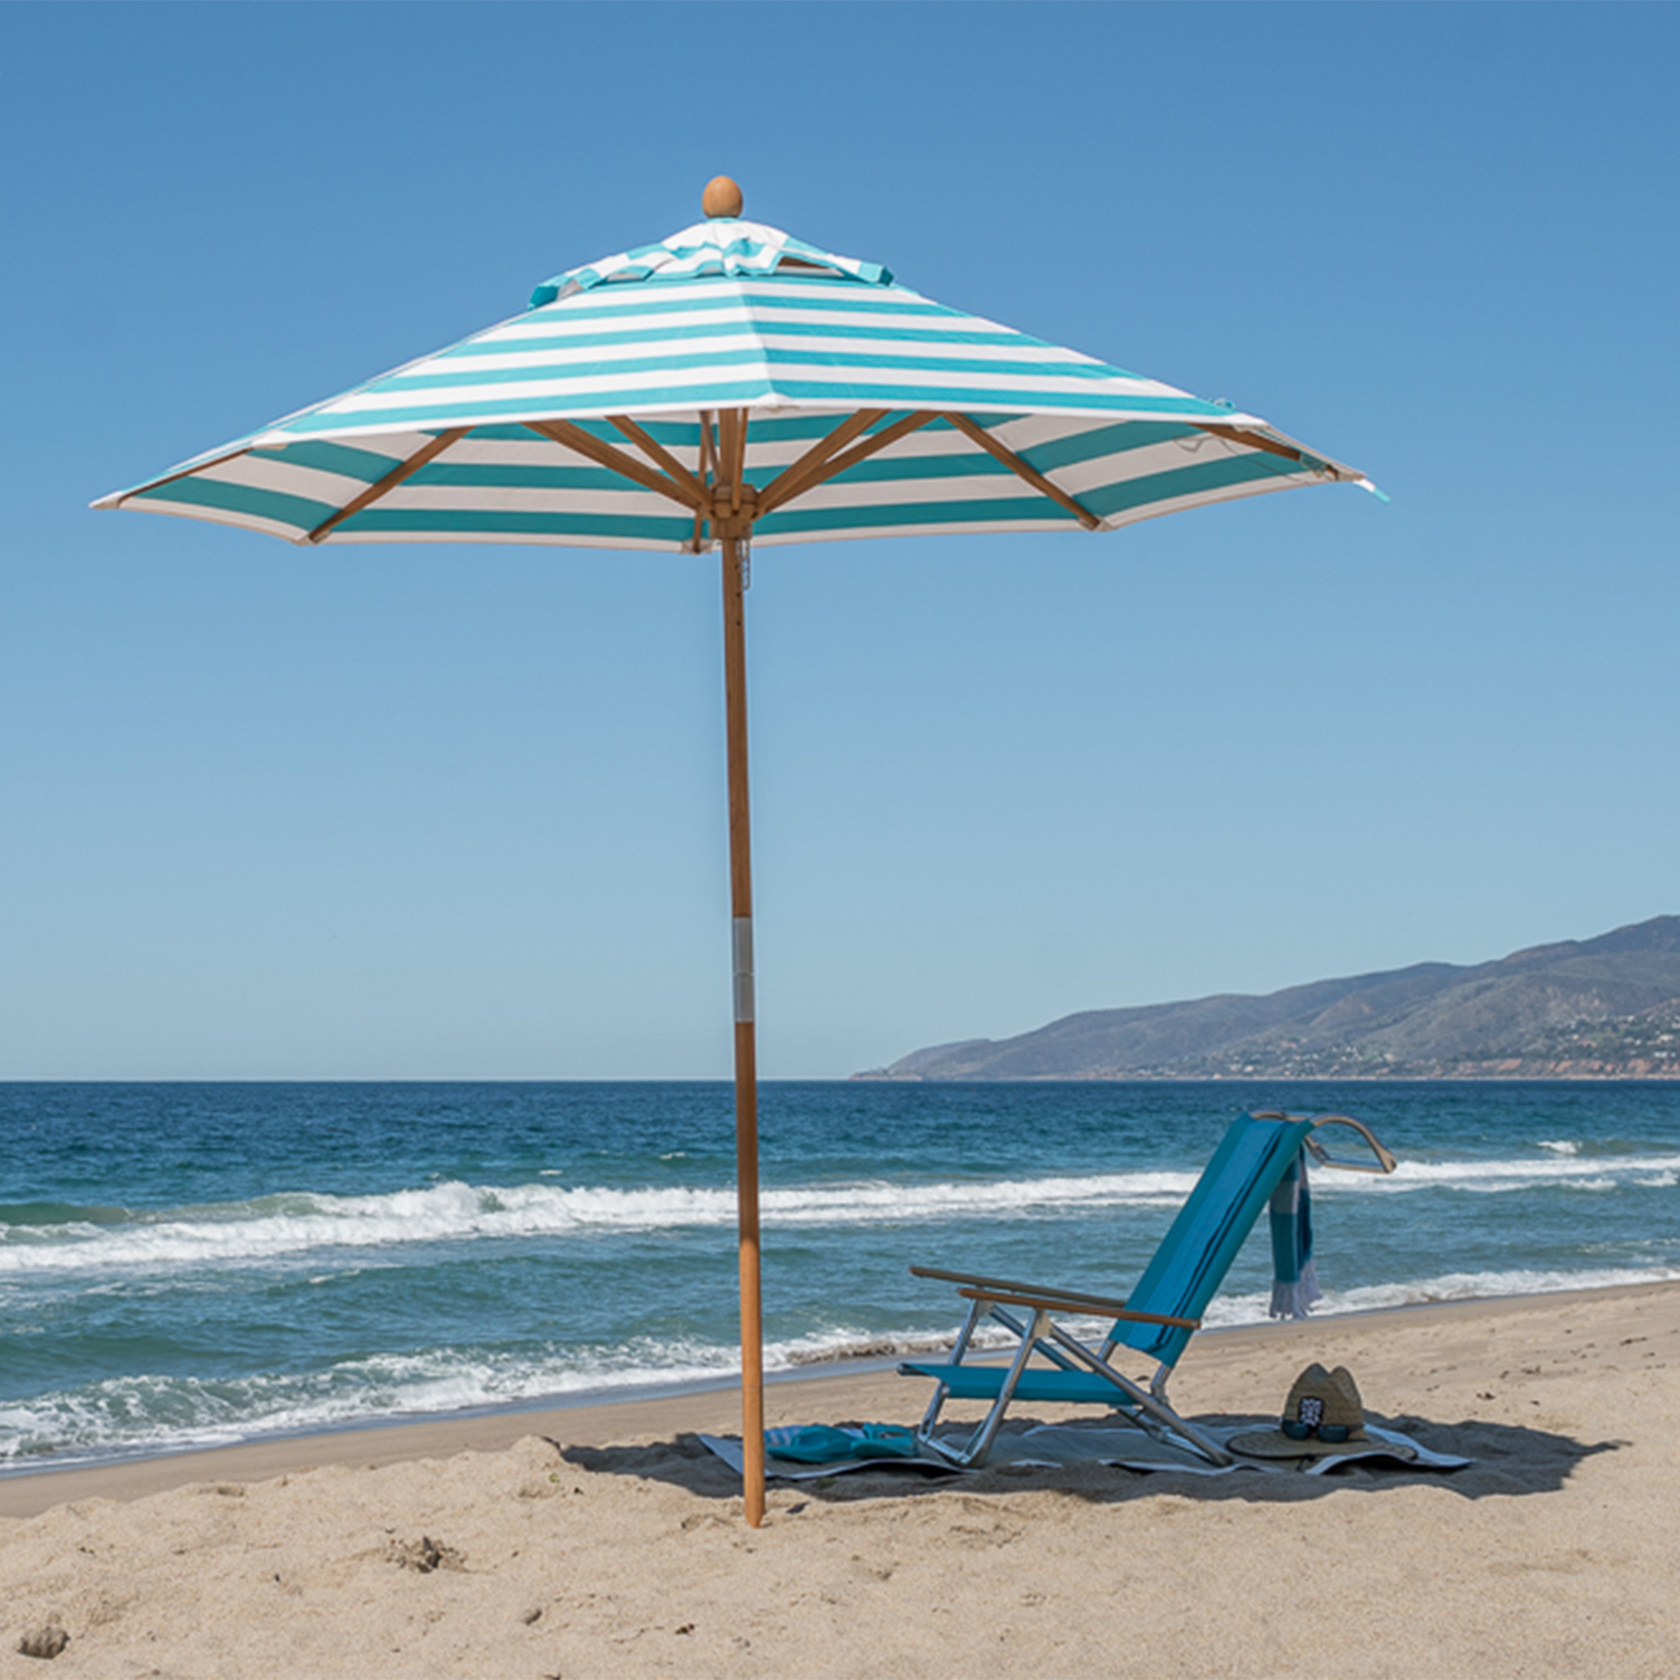 Santa Barbara Style Umbrella Image